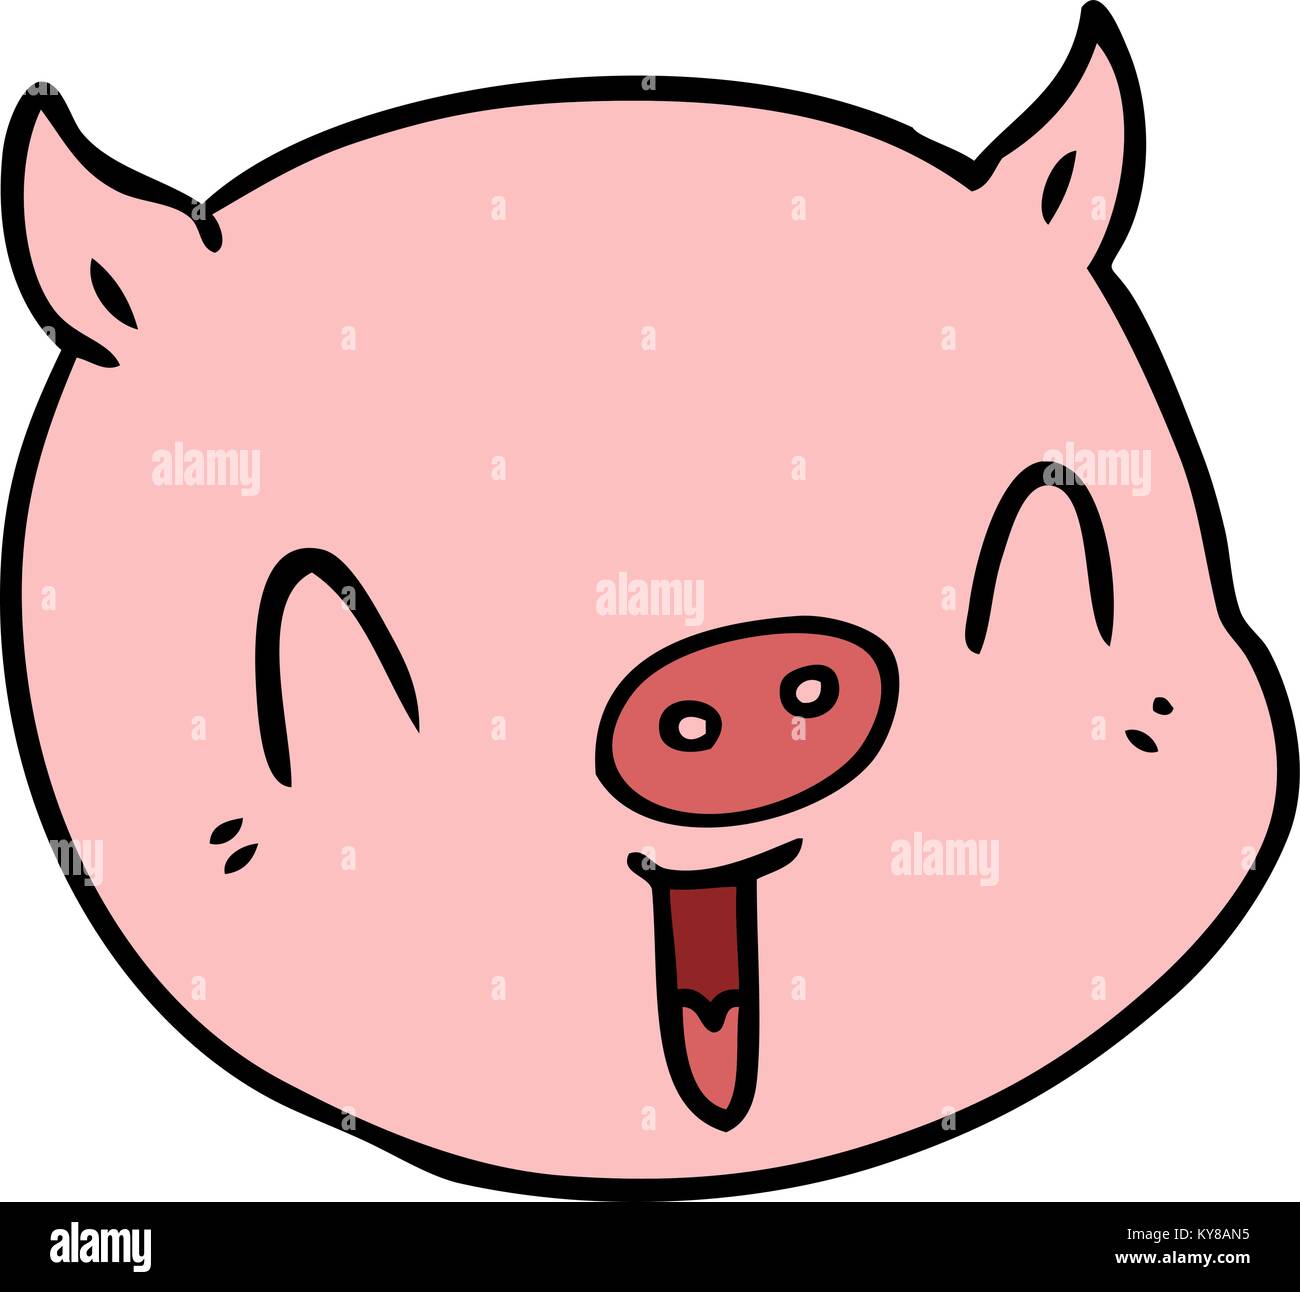 Cara de cerdo de dibujos animados Imagen Vector de stock - Alamy